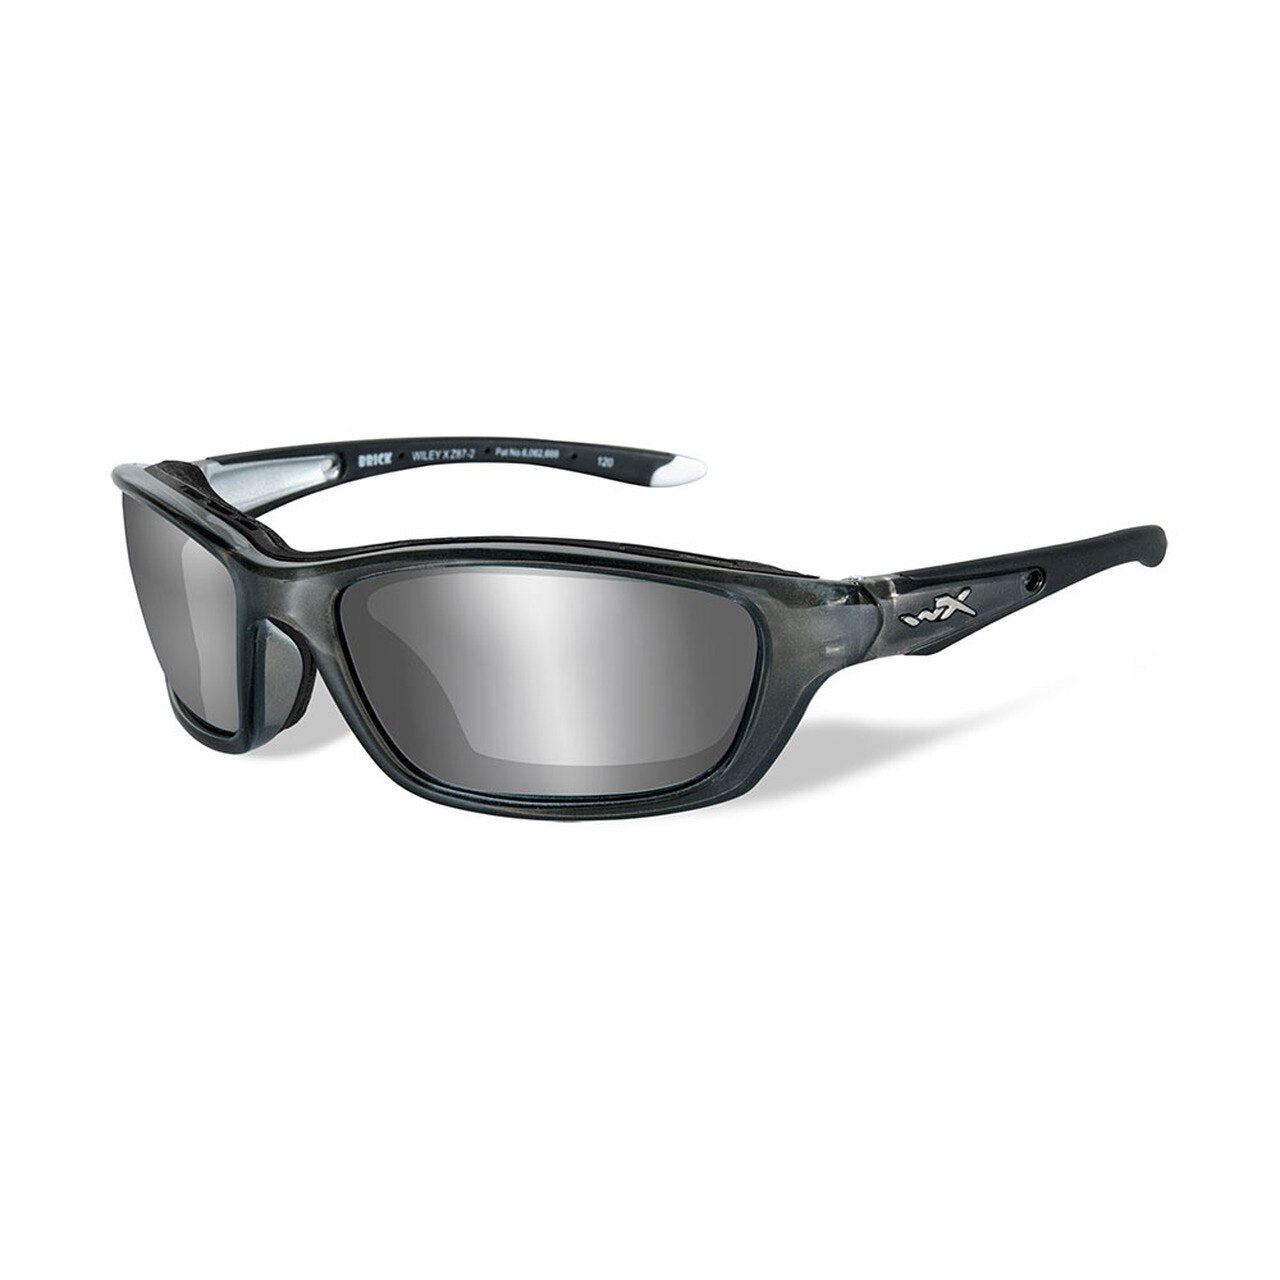 Wiley X Brick Sunglasses Silver Flash Lens Crystal Metallic Frame Tactical Distributors Ltd New Zealand